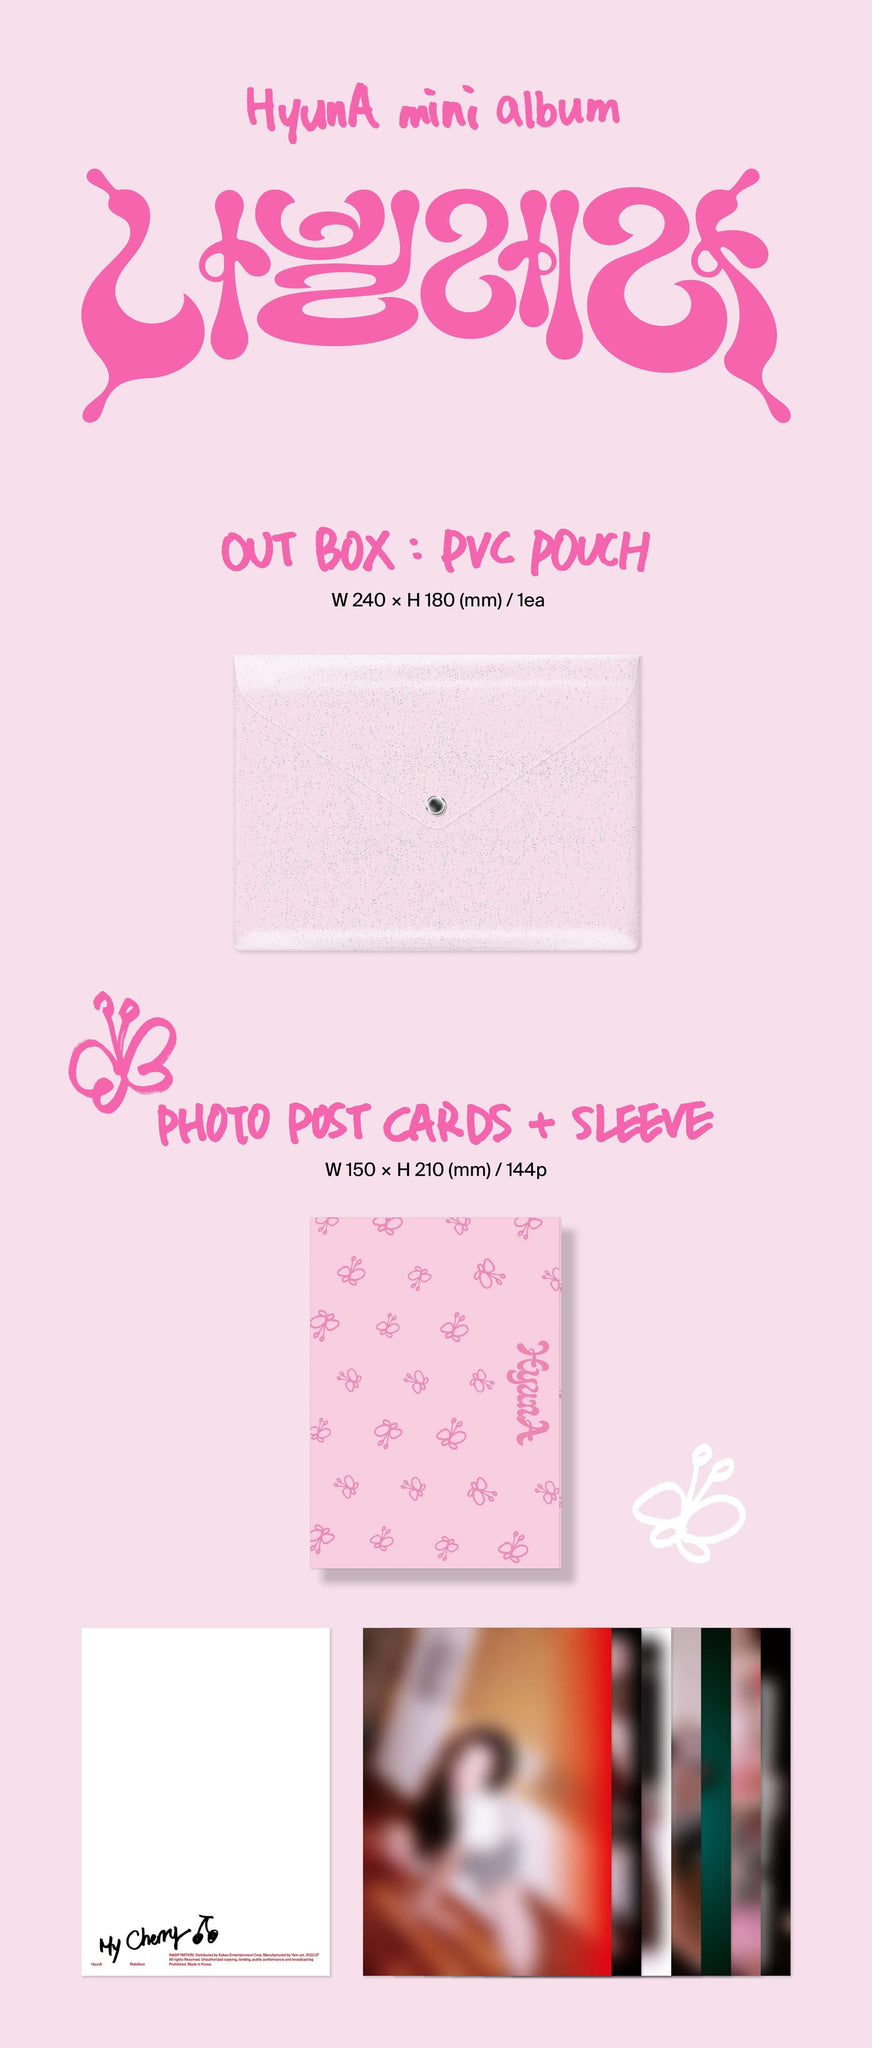 HyunA 8th Mini Album Nabillera Inclusions Out Box PVC Pouch Photo Postcards Sleeve